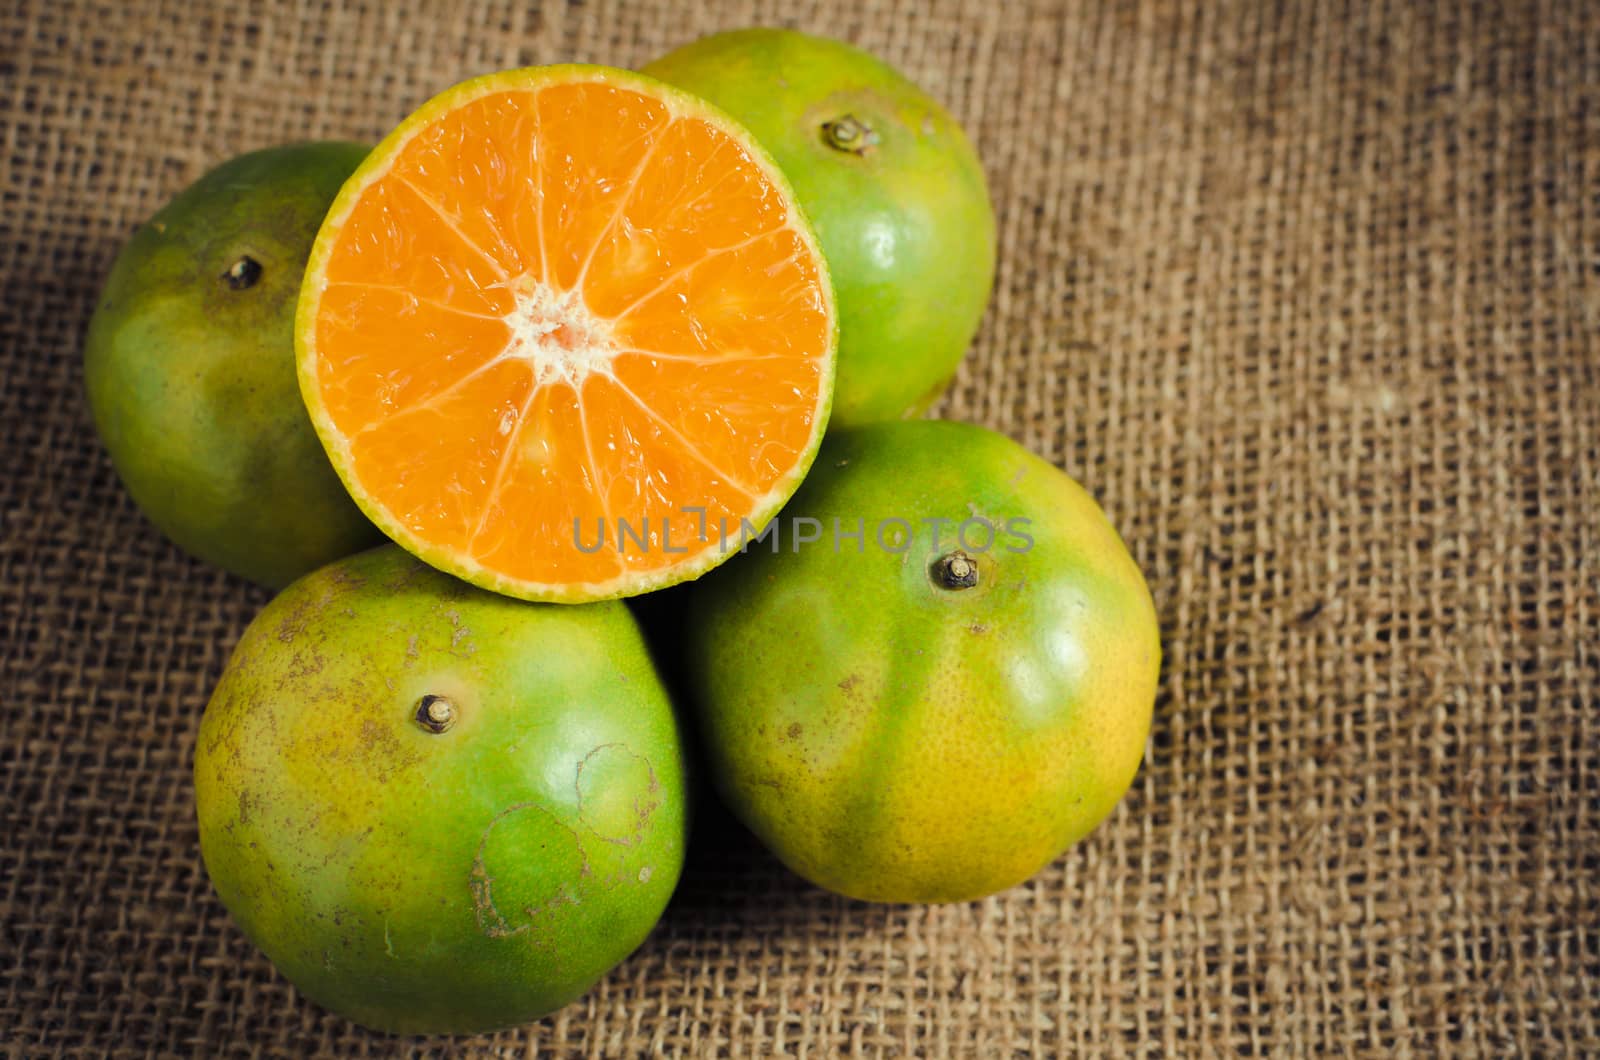 mandarin orange,Tangerines, sweet green thai orange on natural linen